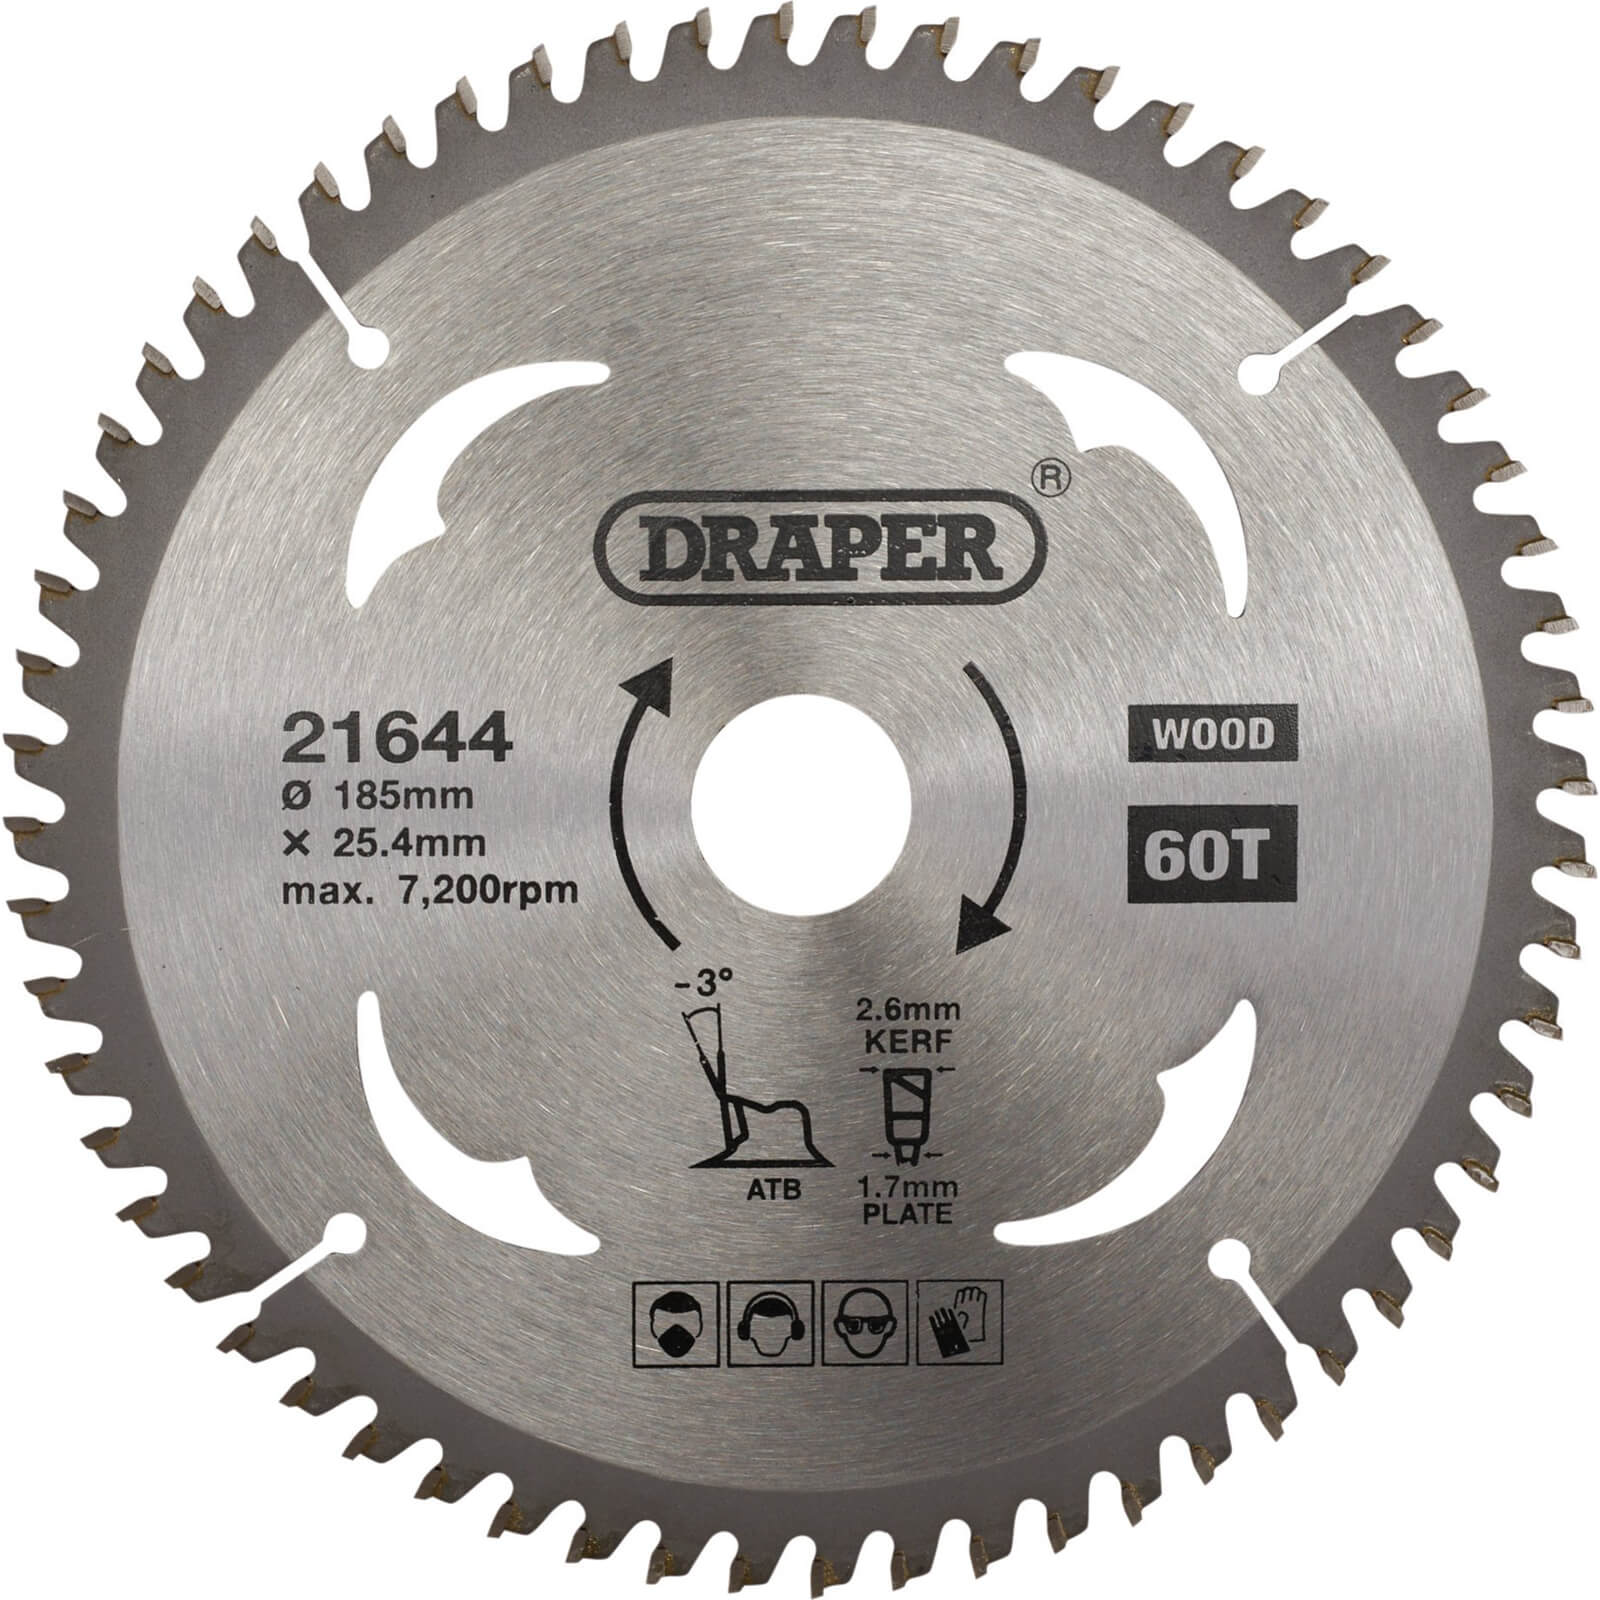 Image of Draper TCT Laminate and Wood Cutting Circular Saw Blade 185mm 60T 25.4mm